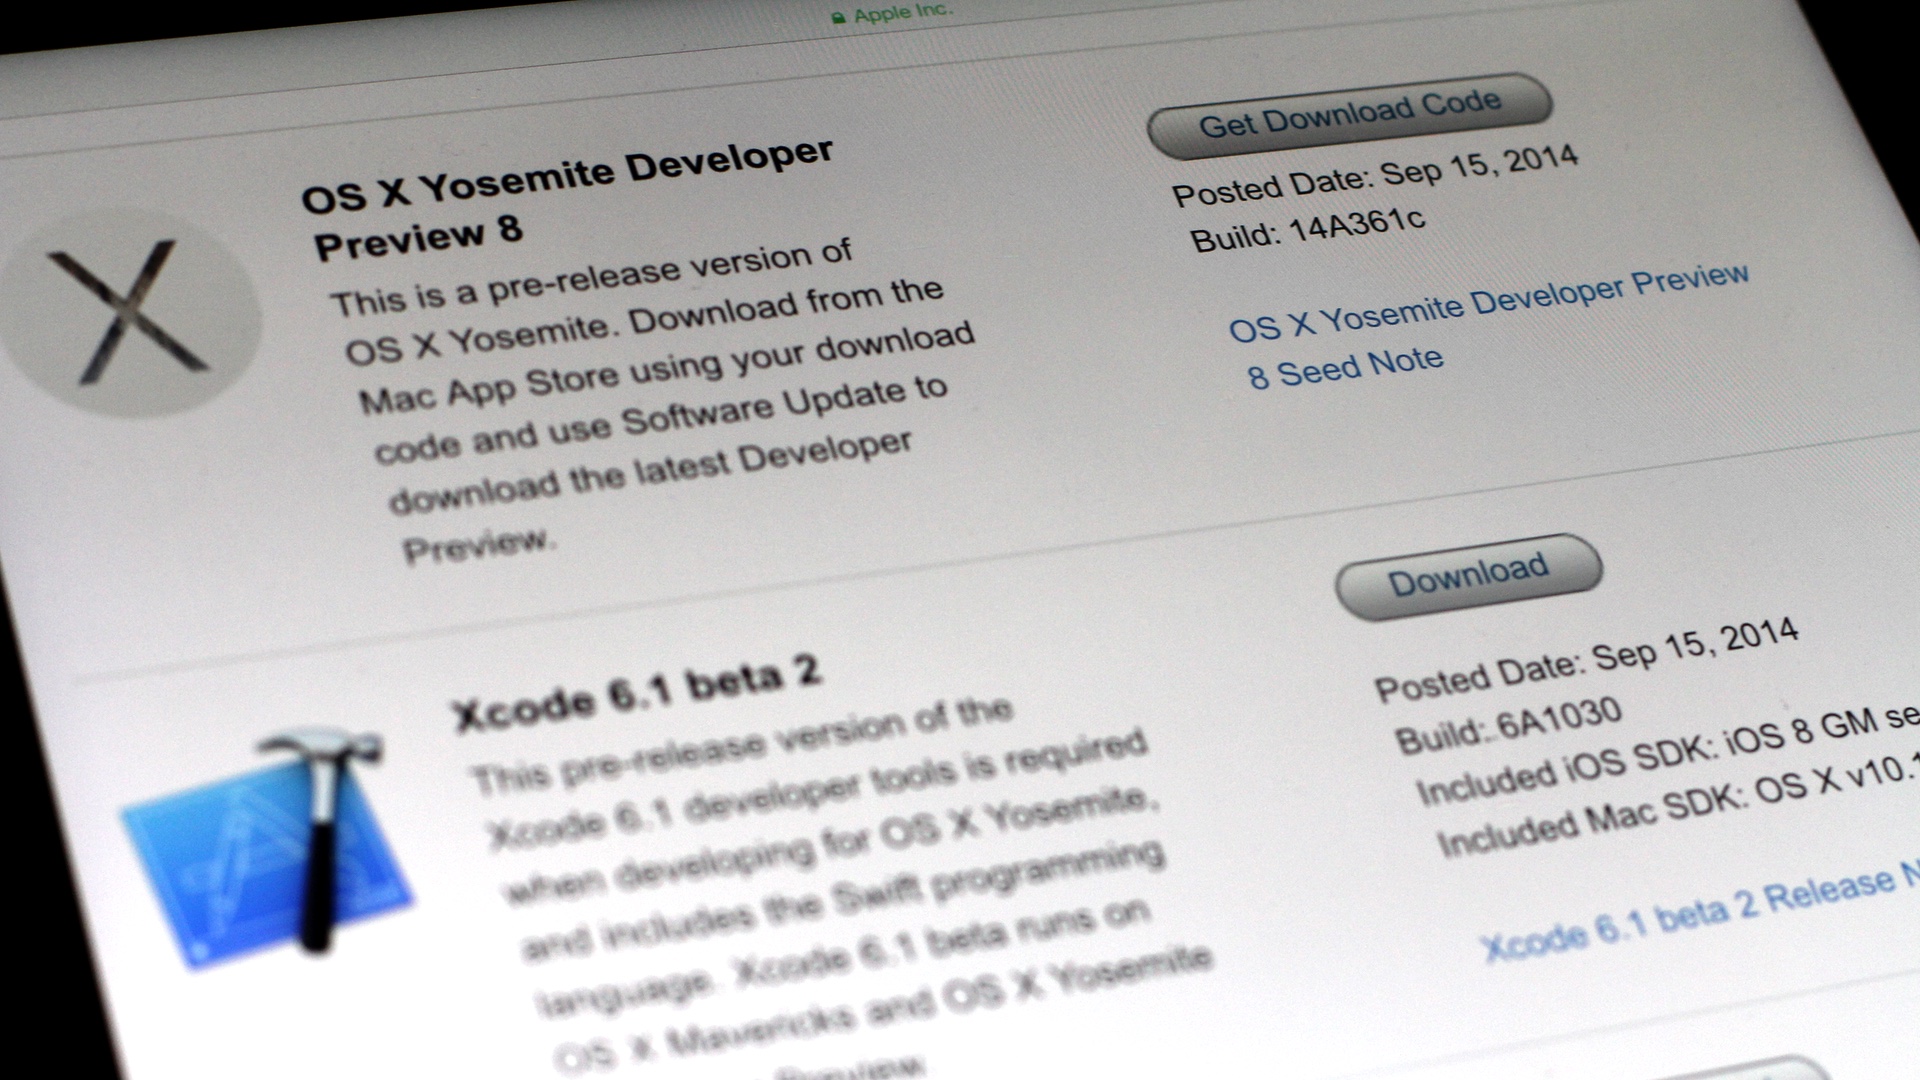 OS X Yosemite Developer Preview 8 build 14A361c